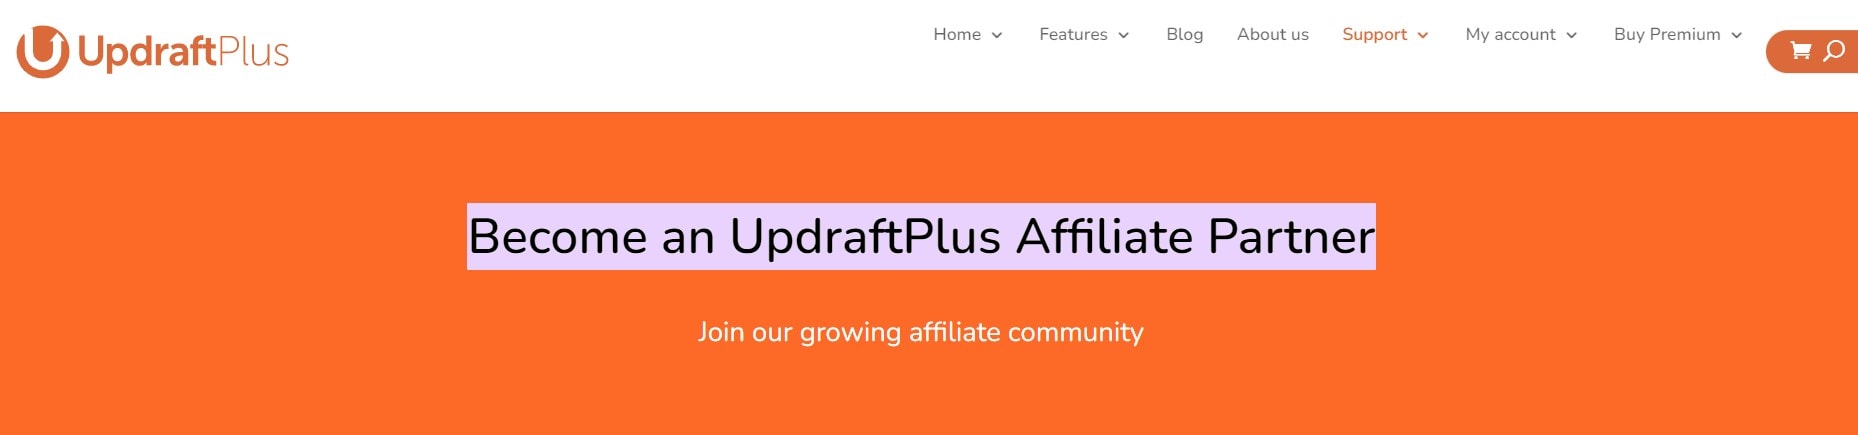 Updraft Plus affiliate programs